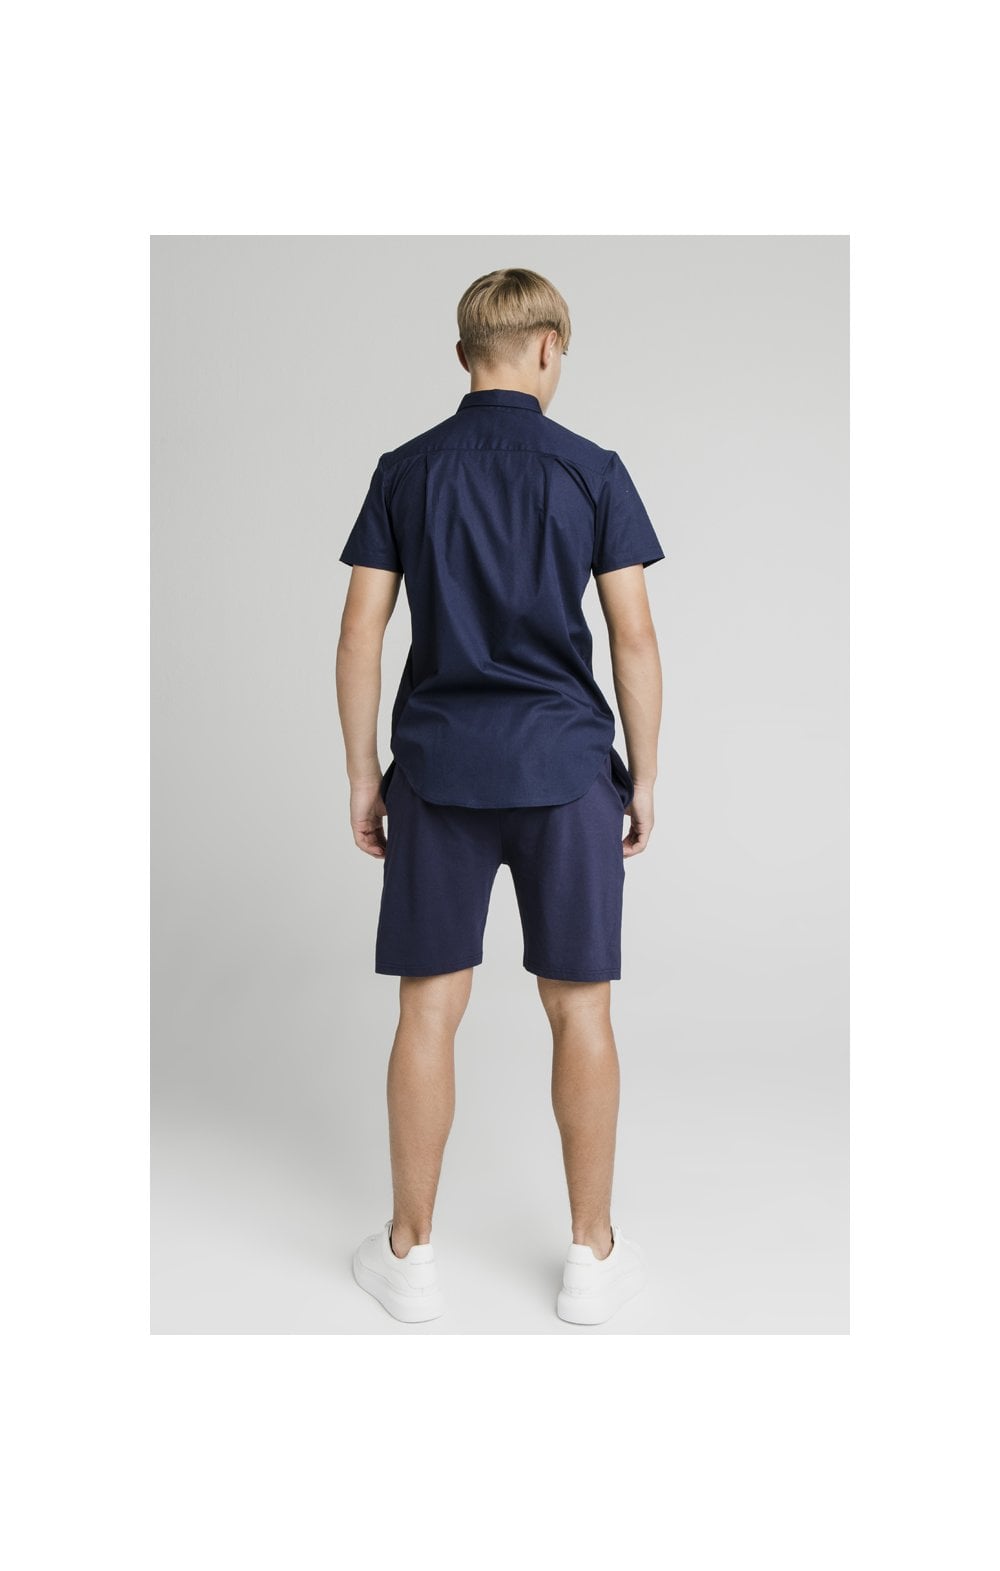 Illusive London Side Tape Jersey Shorts - Navy (7)